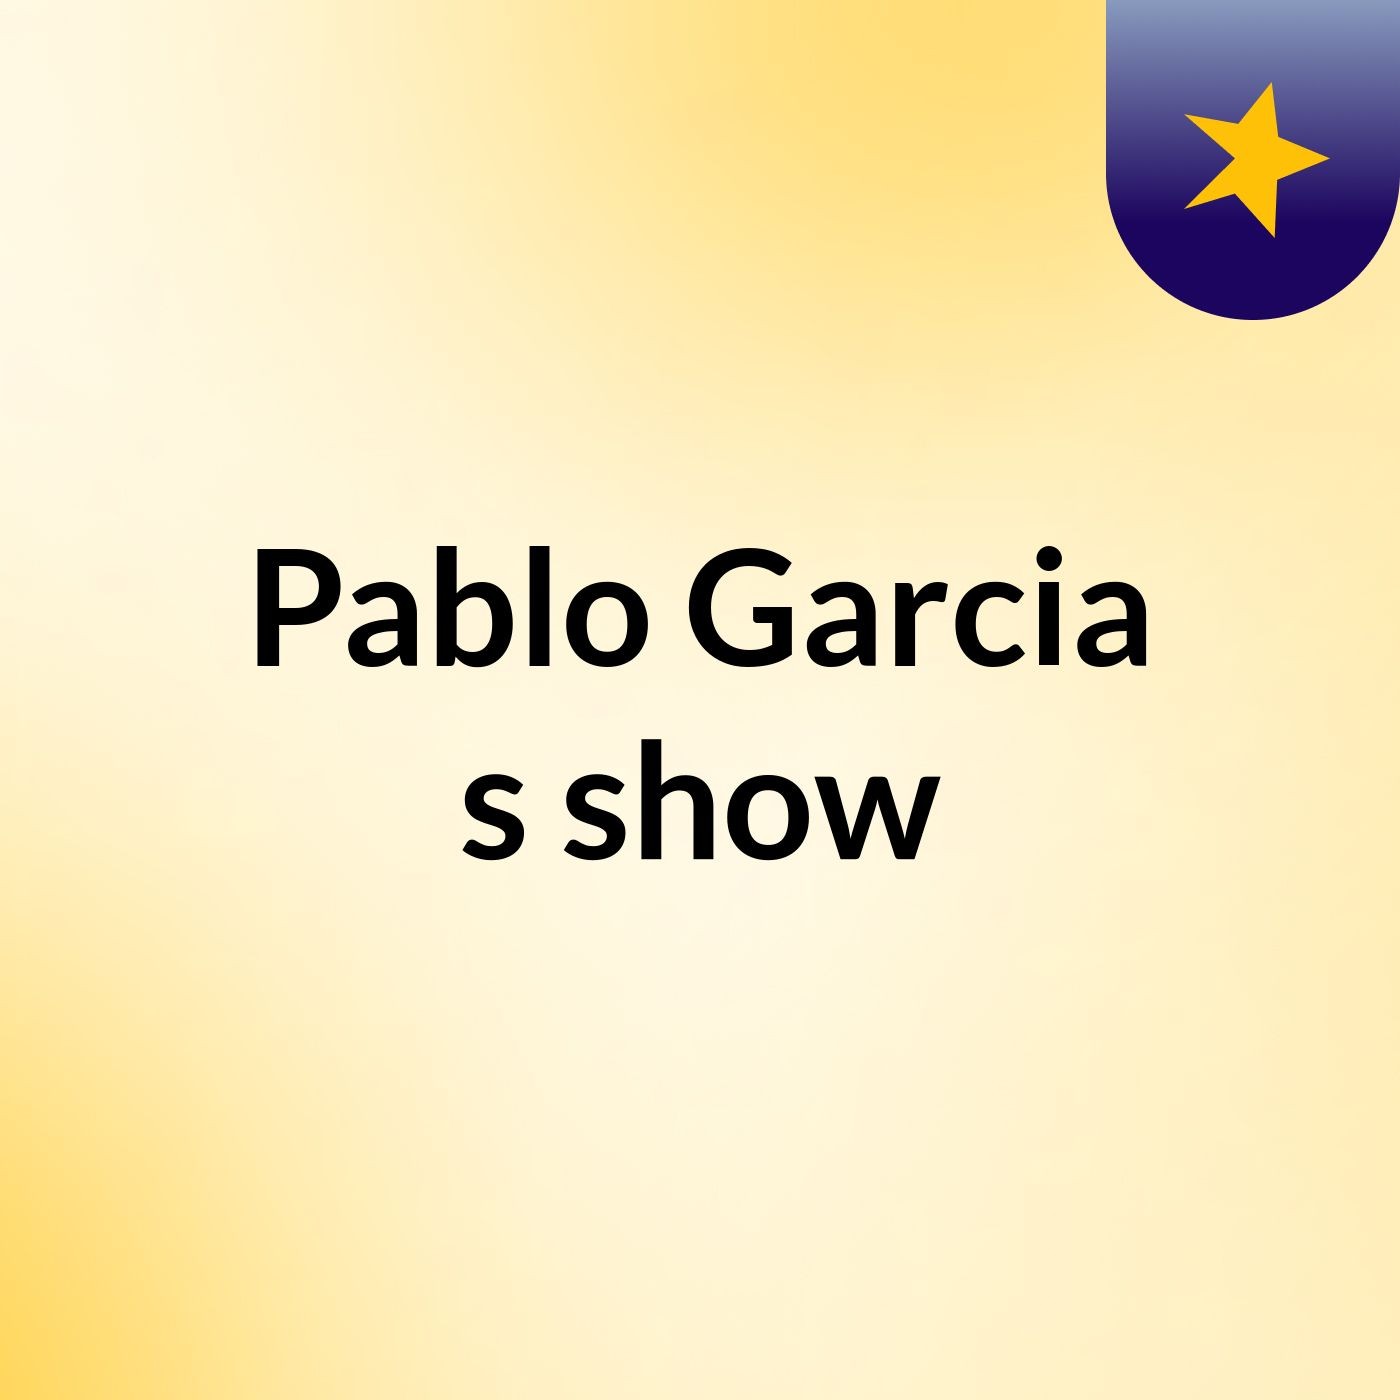 Pablo Garcia's show